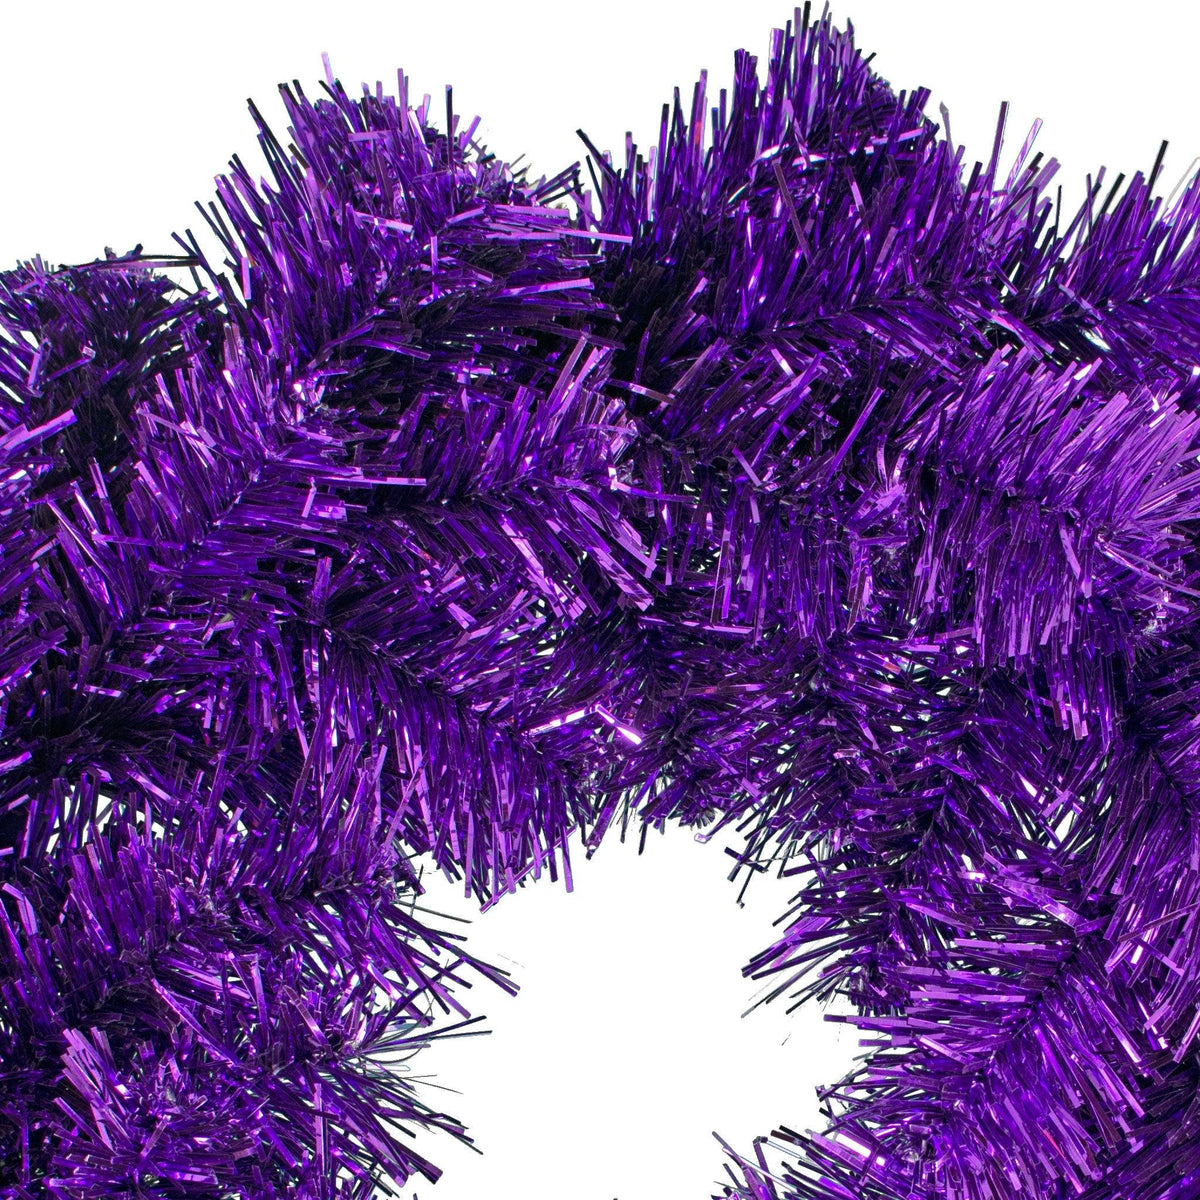 Upclose of the shiny purple tinsel brush.  18in Diameter Purple Tinsel Christmas Wreath on sale at leedisplay.com